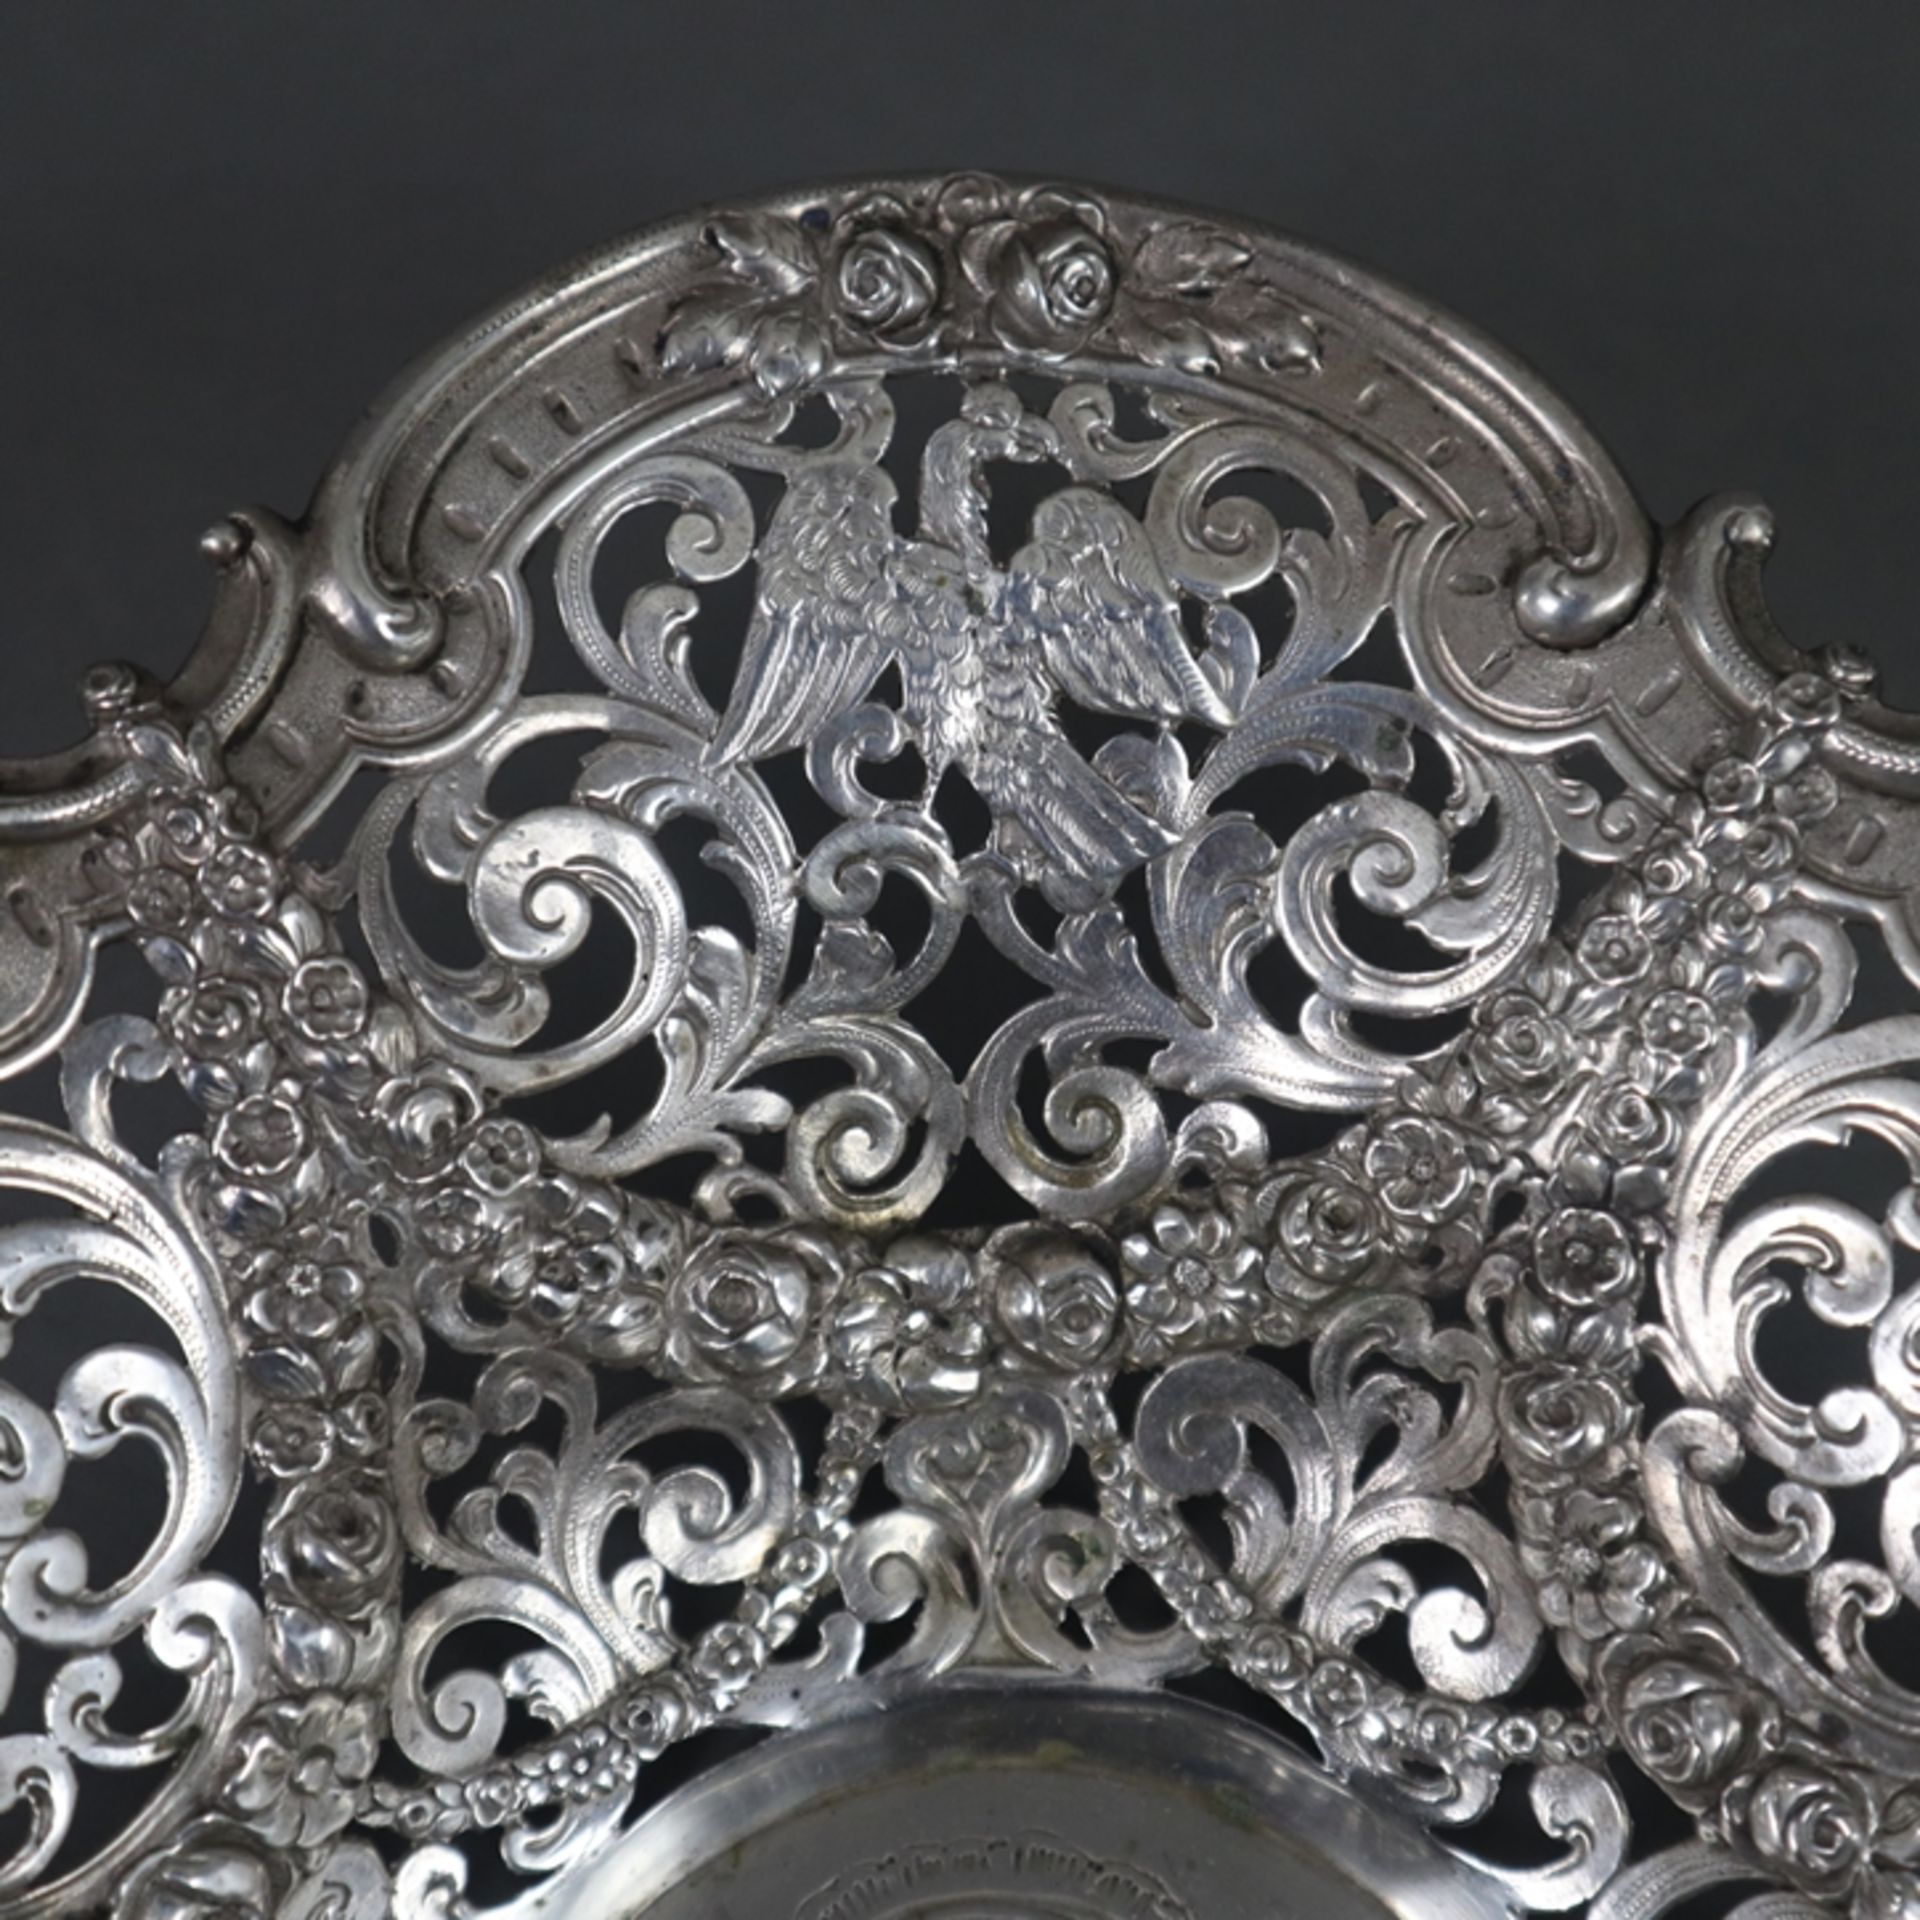 Üppig dekorierte Korbschale - deutsch, Silber 800/000, gestempelt, oval, geschweifte filigran durch - Bild 5 aus 10